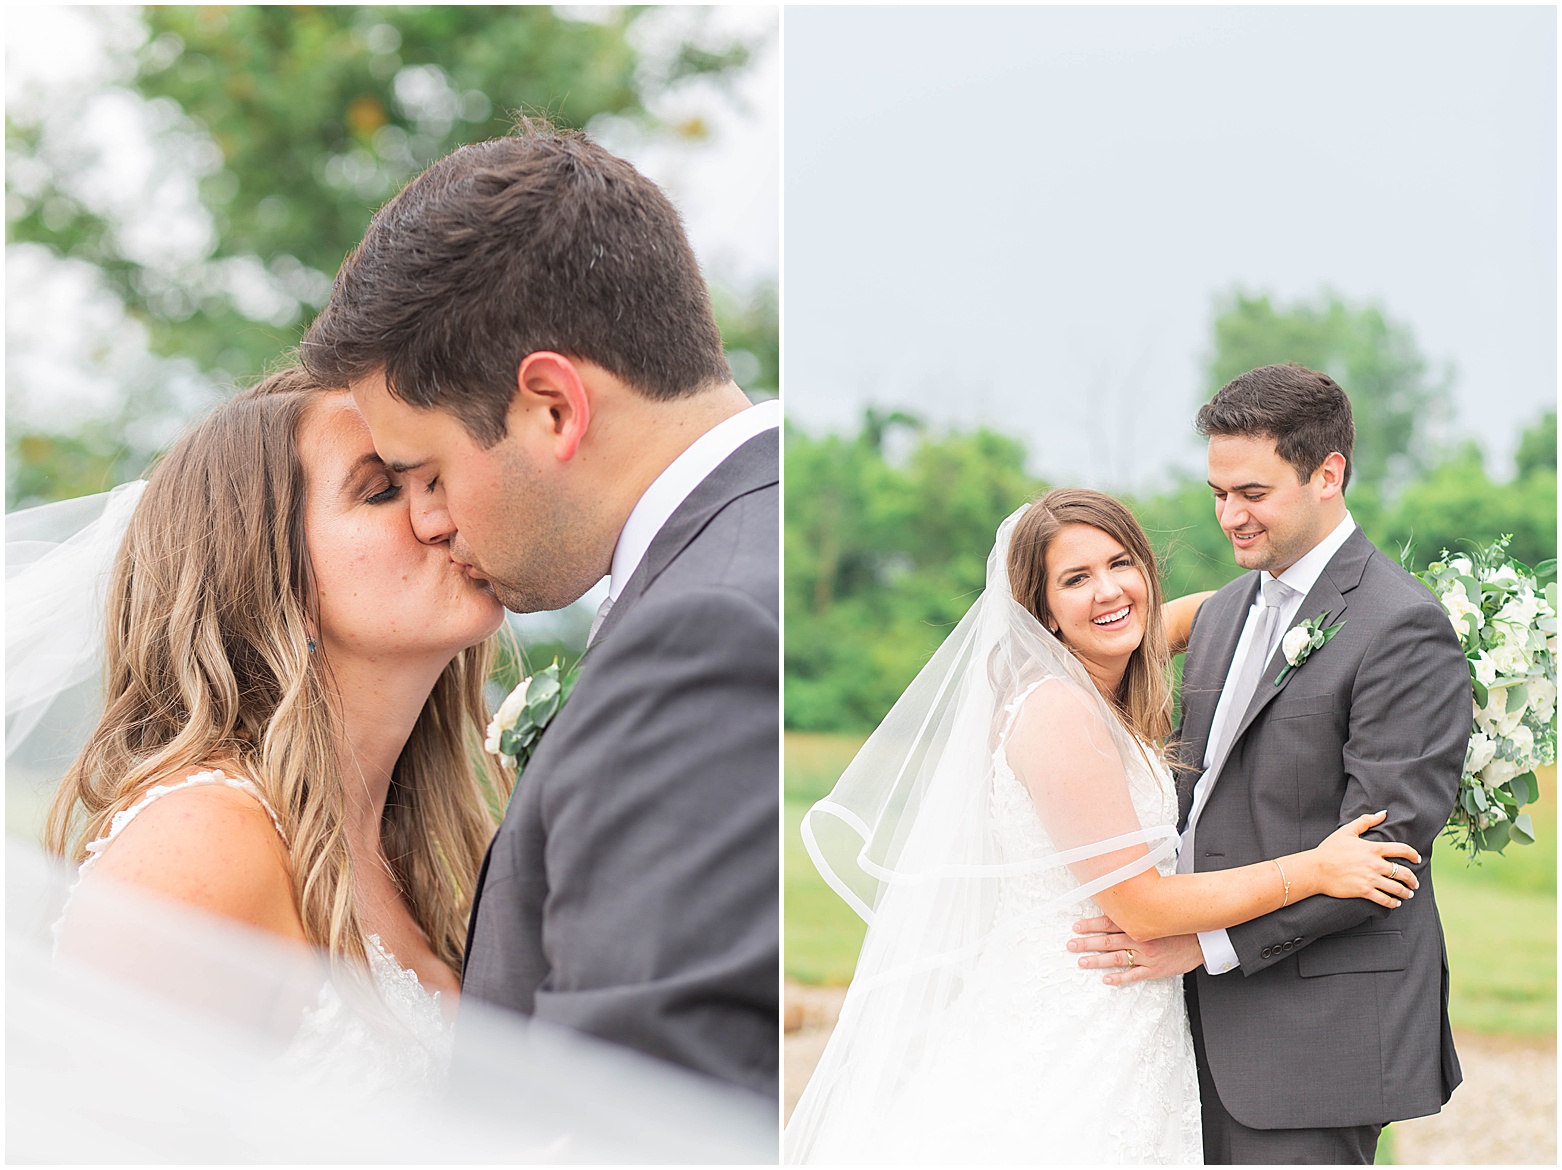 Reverie in Dayton, Ohio Summer Wedding | Mr. & Mrs. Smith | Monica Brown Photography